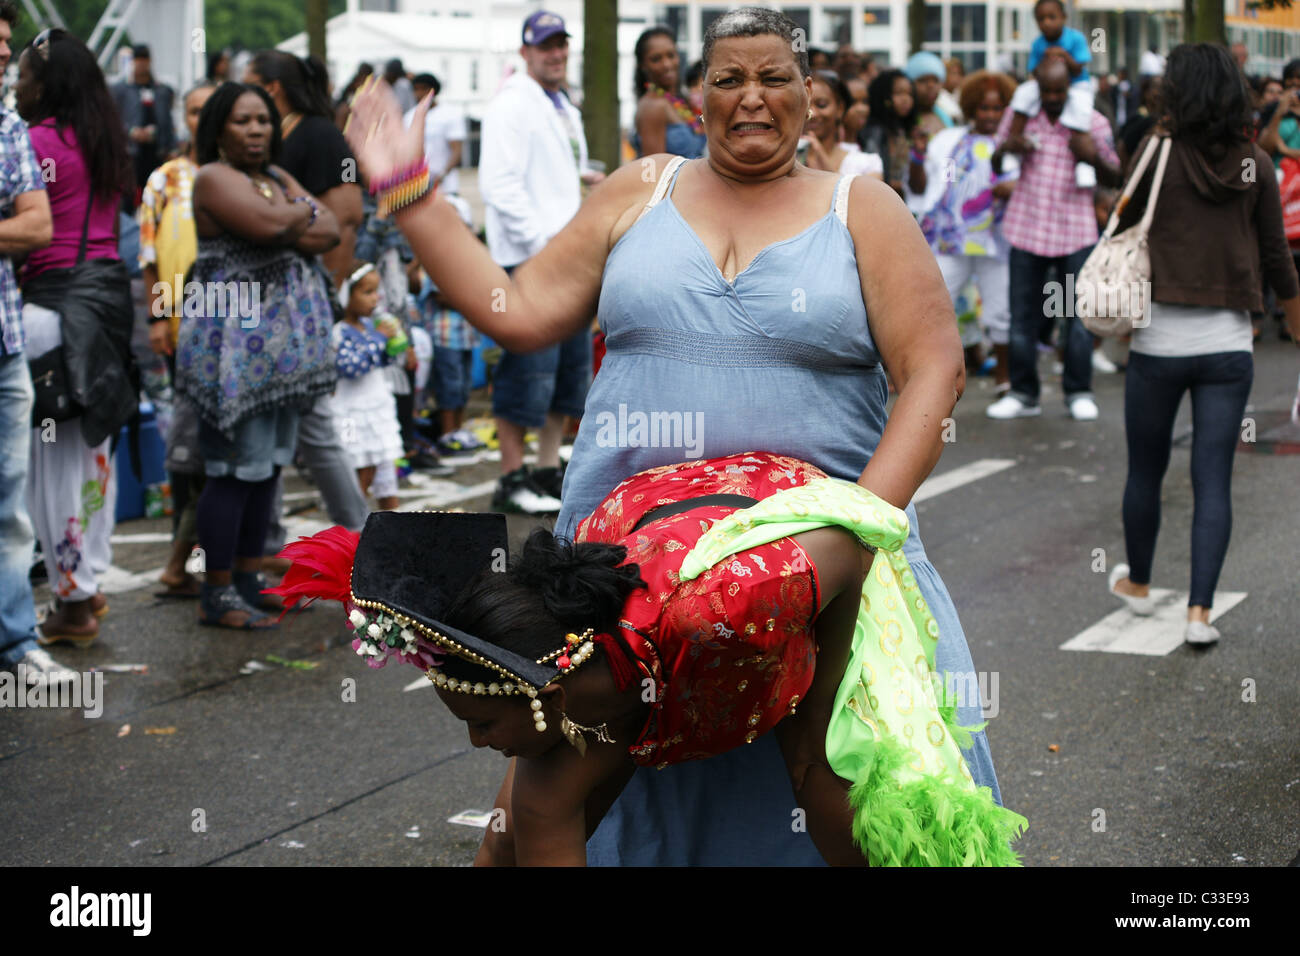 Dicke Frau schlagen kostümierte Tänzer im Sommer Karneval Festival Rotterdam Straßenkampf Stockfoto